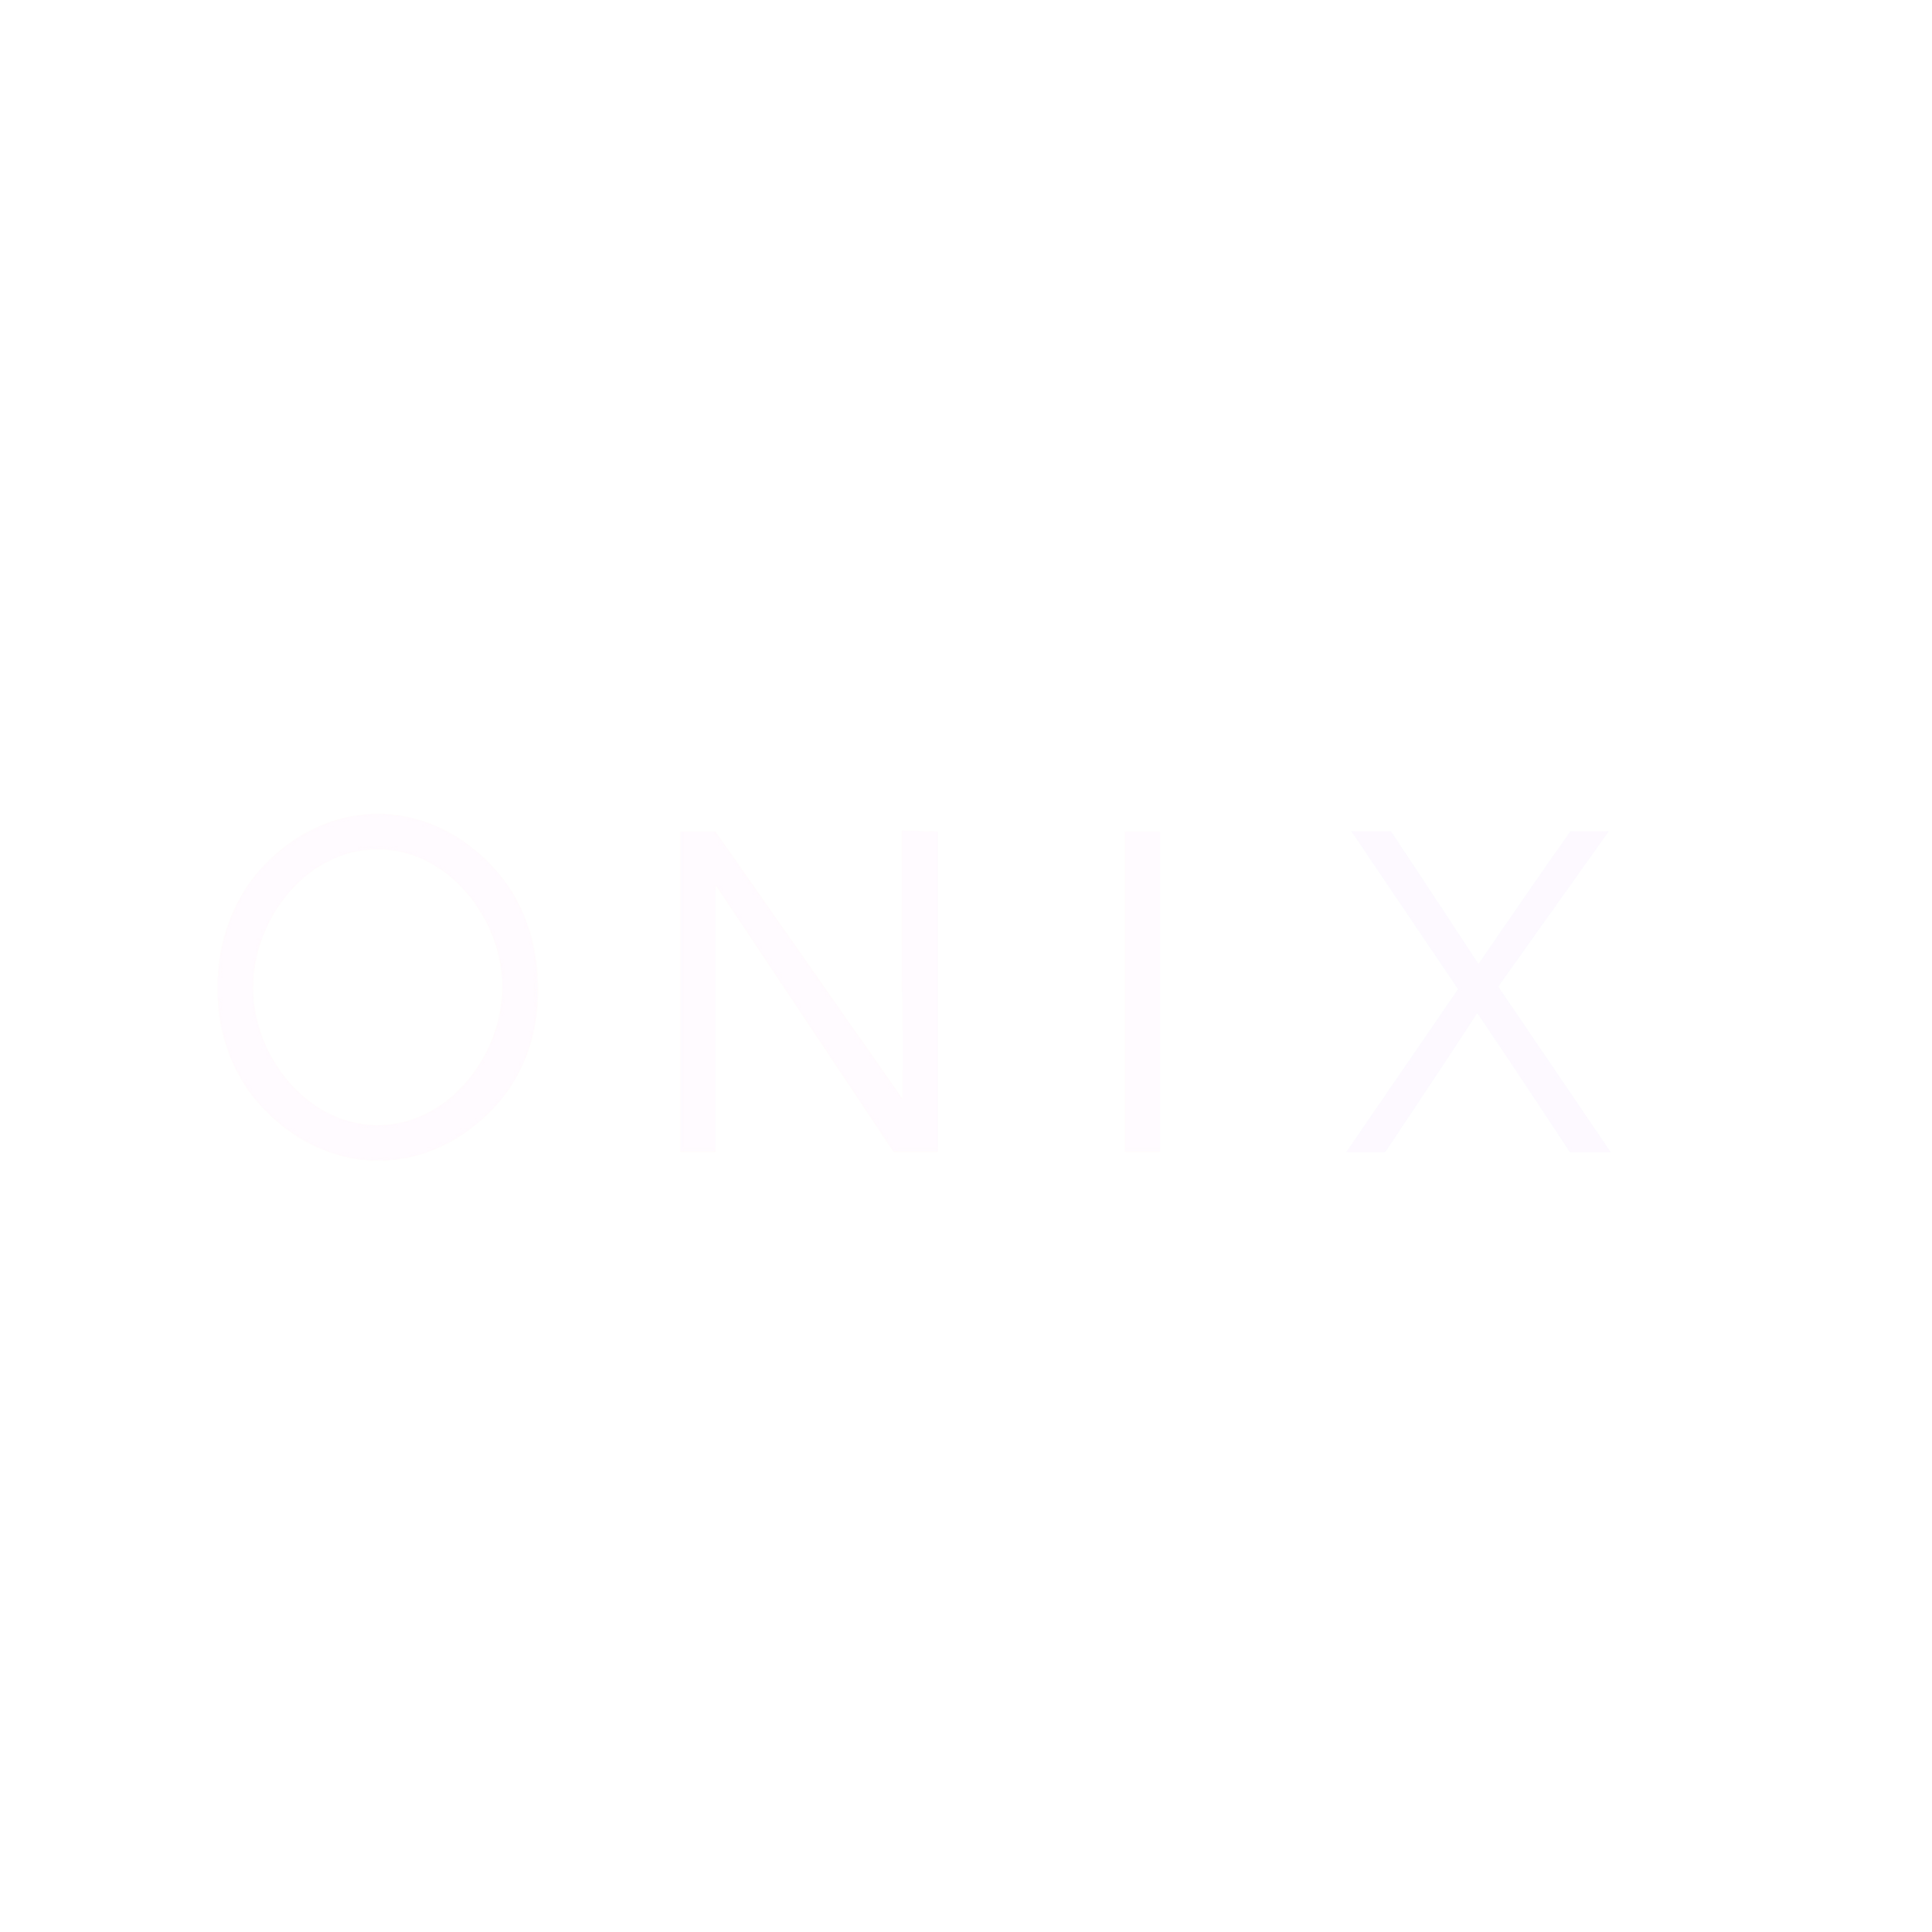 Onix Mosaico